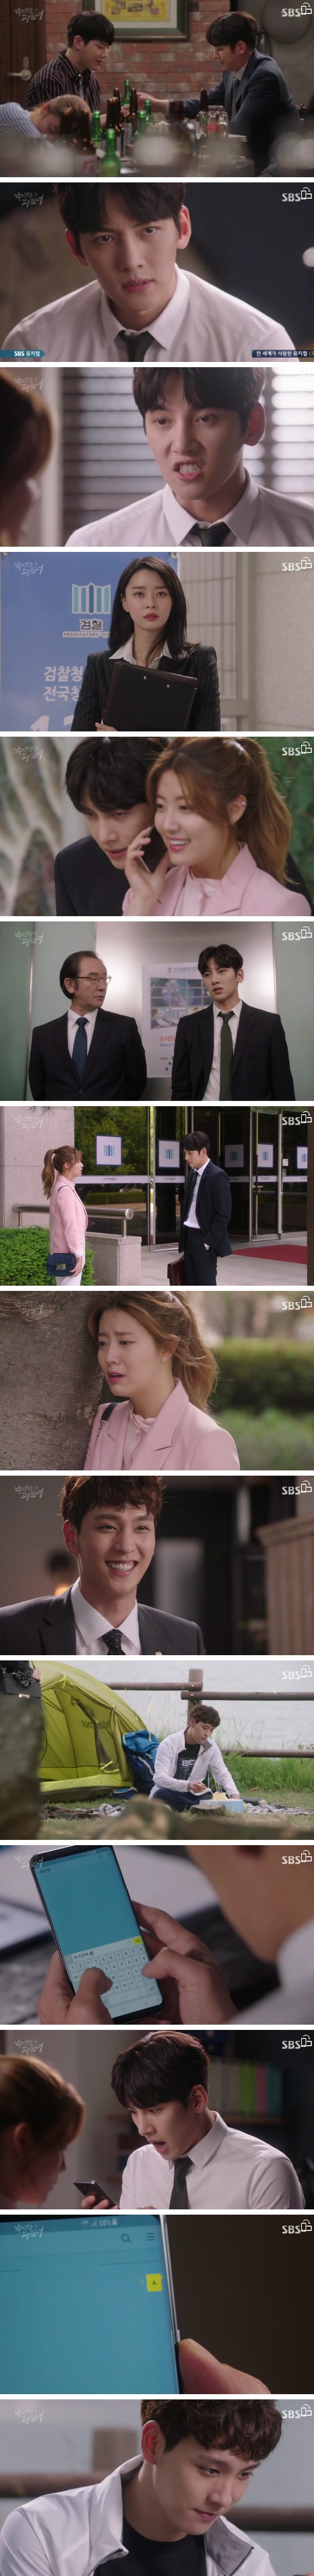 episodes 15 and 16 captures for the Korean drama 'Suspicious Partner'